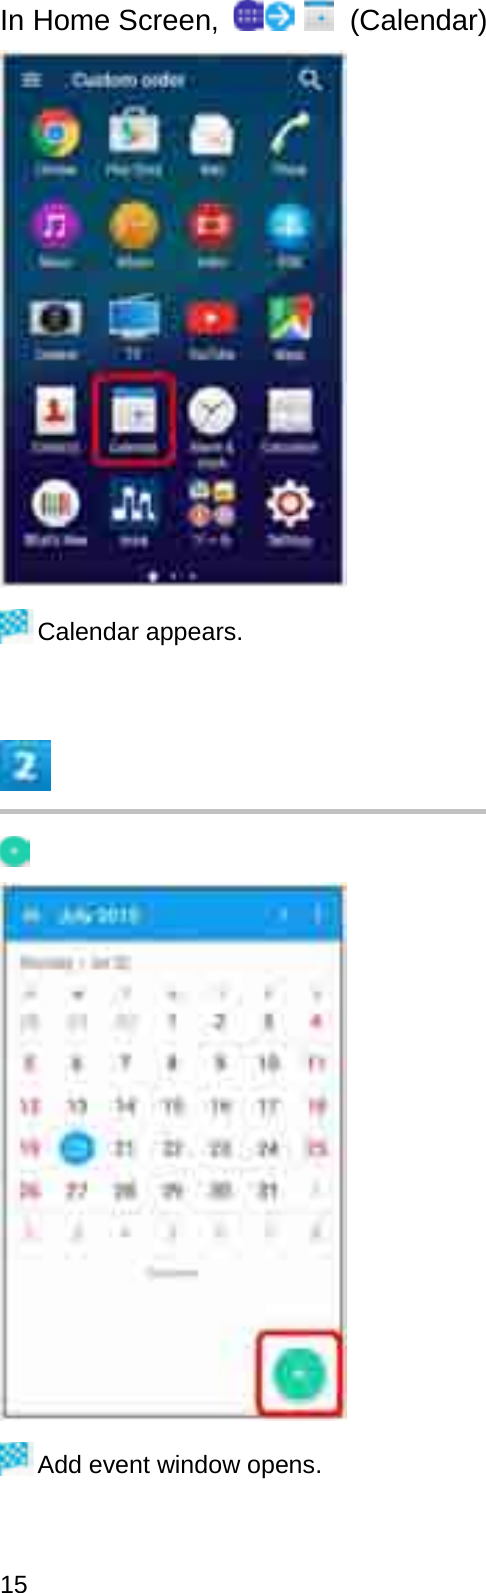 In Home Screen,  (Calendar)Calendar appears.Add event window opens.15